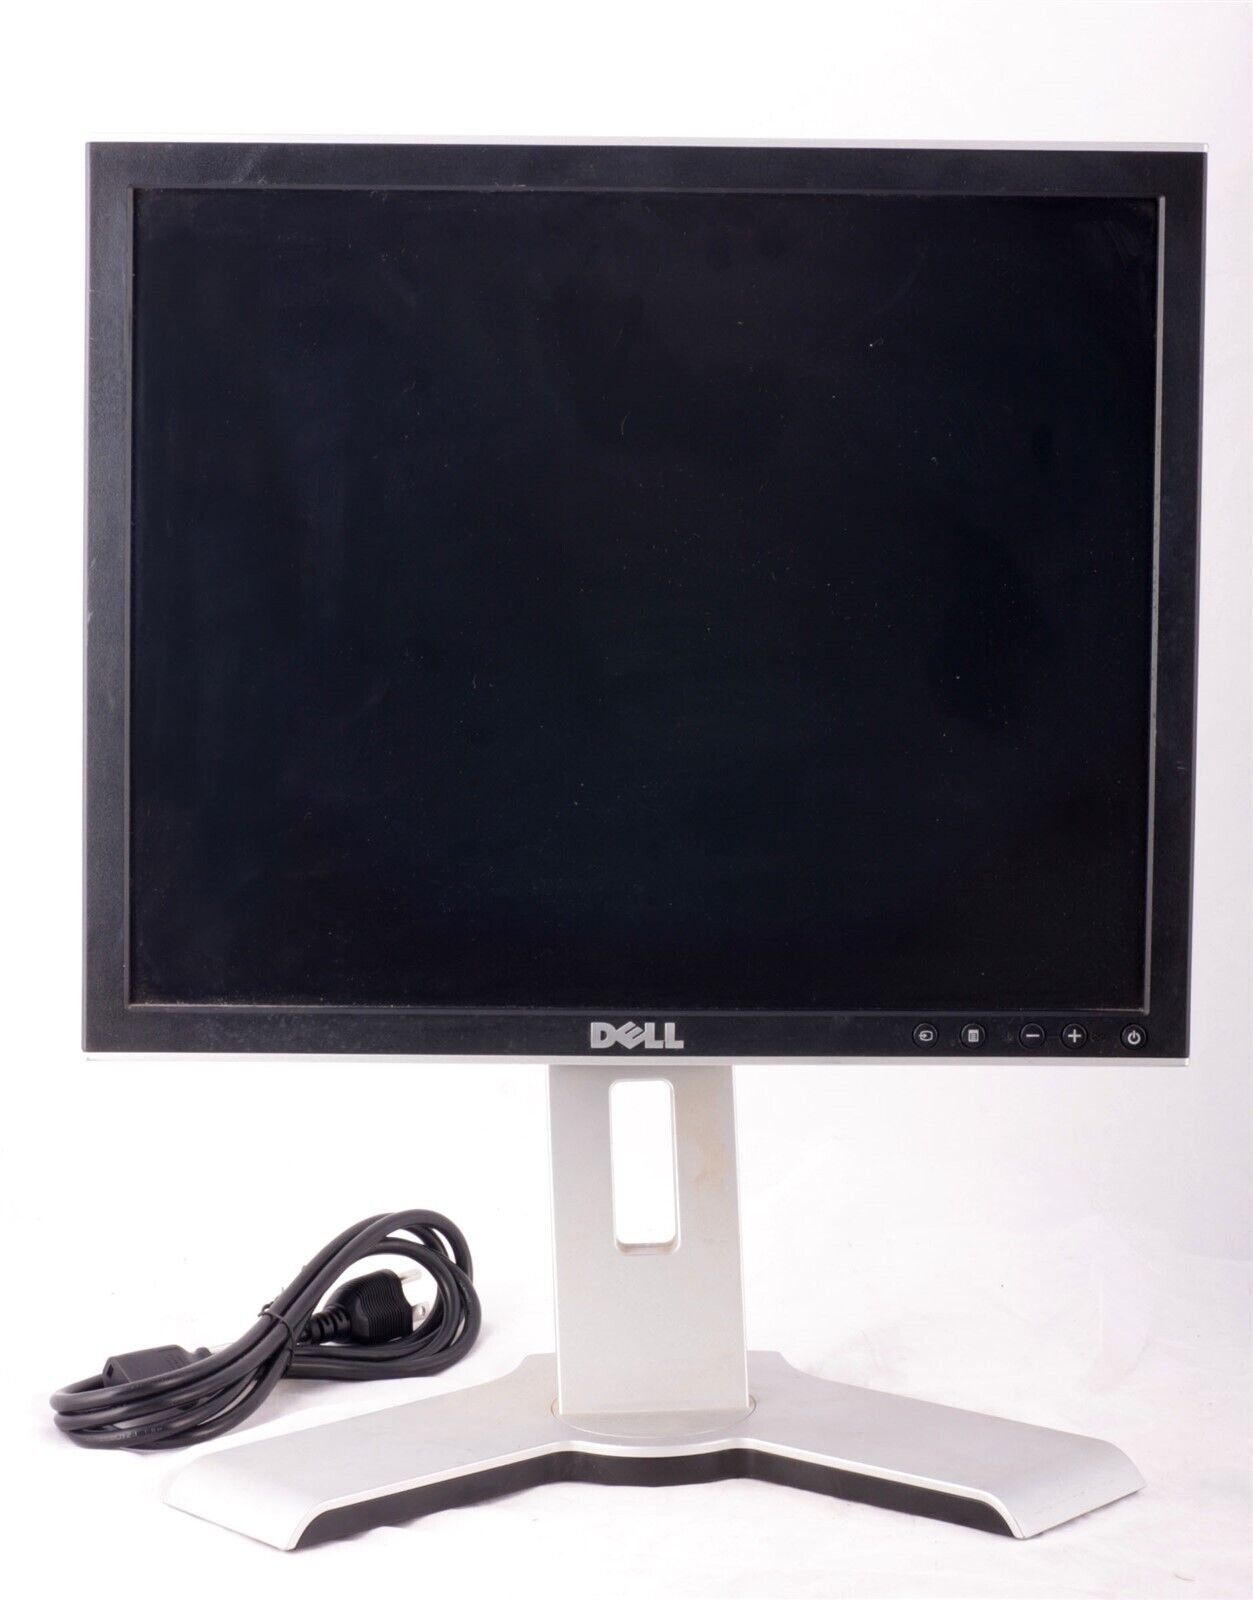 Dell 1707FPt LCD Monitor DVI & VGA inputs USP Hub rotates vertical or horizontal